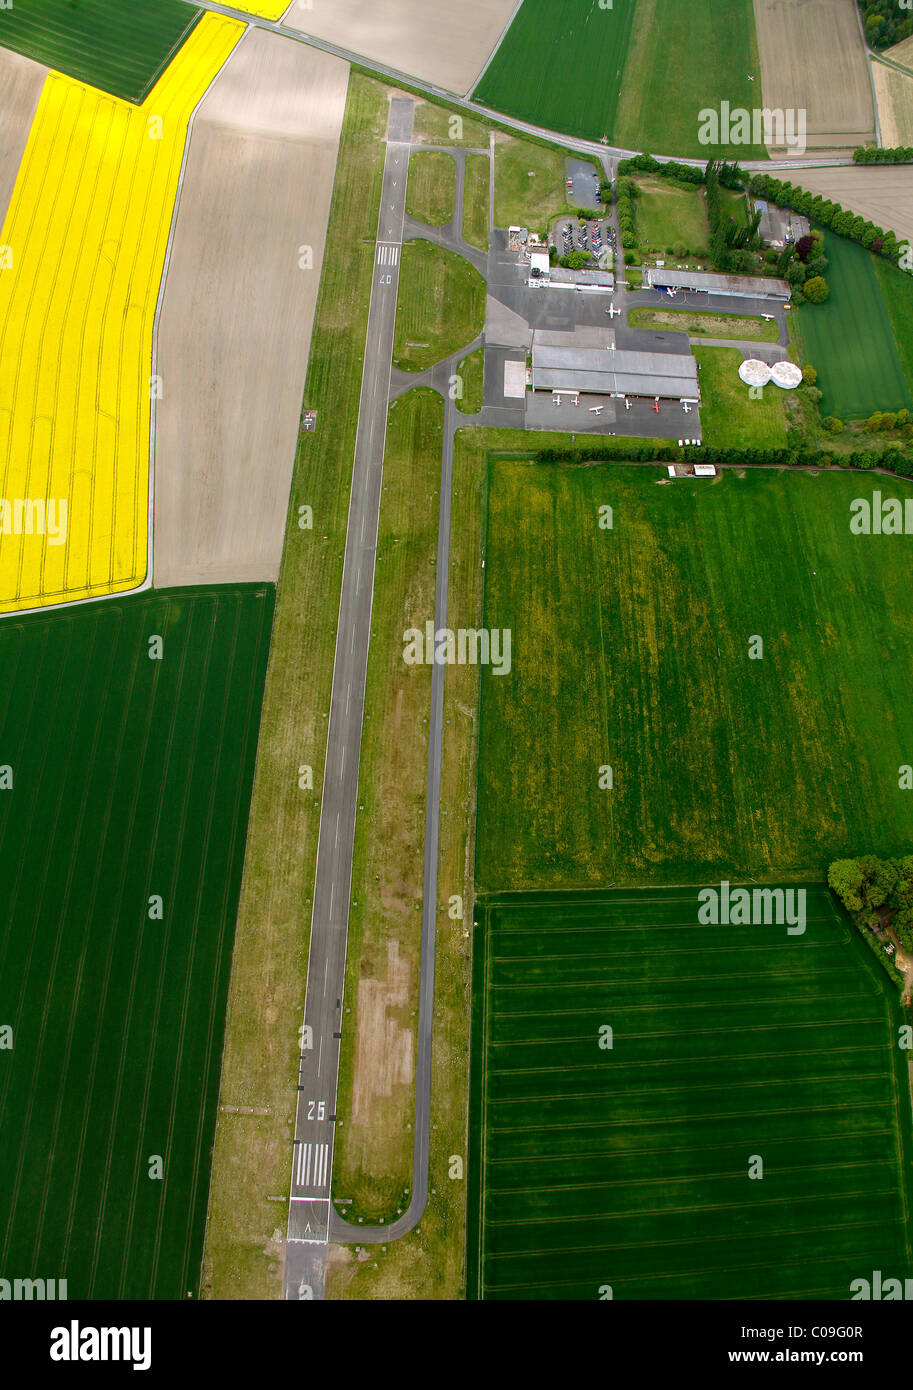 Vista aerea, hangar aereo, aviazione generale airfield, airfield pista EDLM Marl, Marl, Ruhrgebiet regione Foto Stock